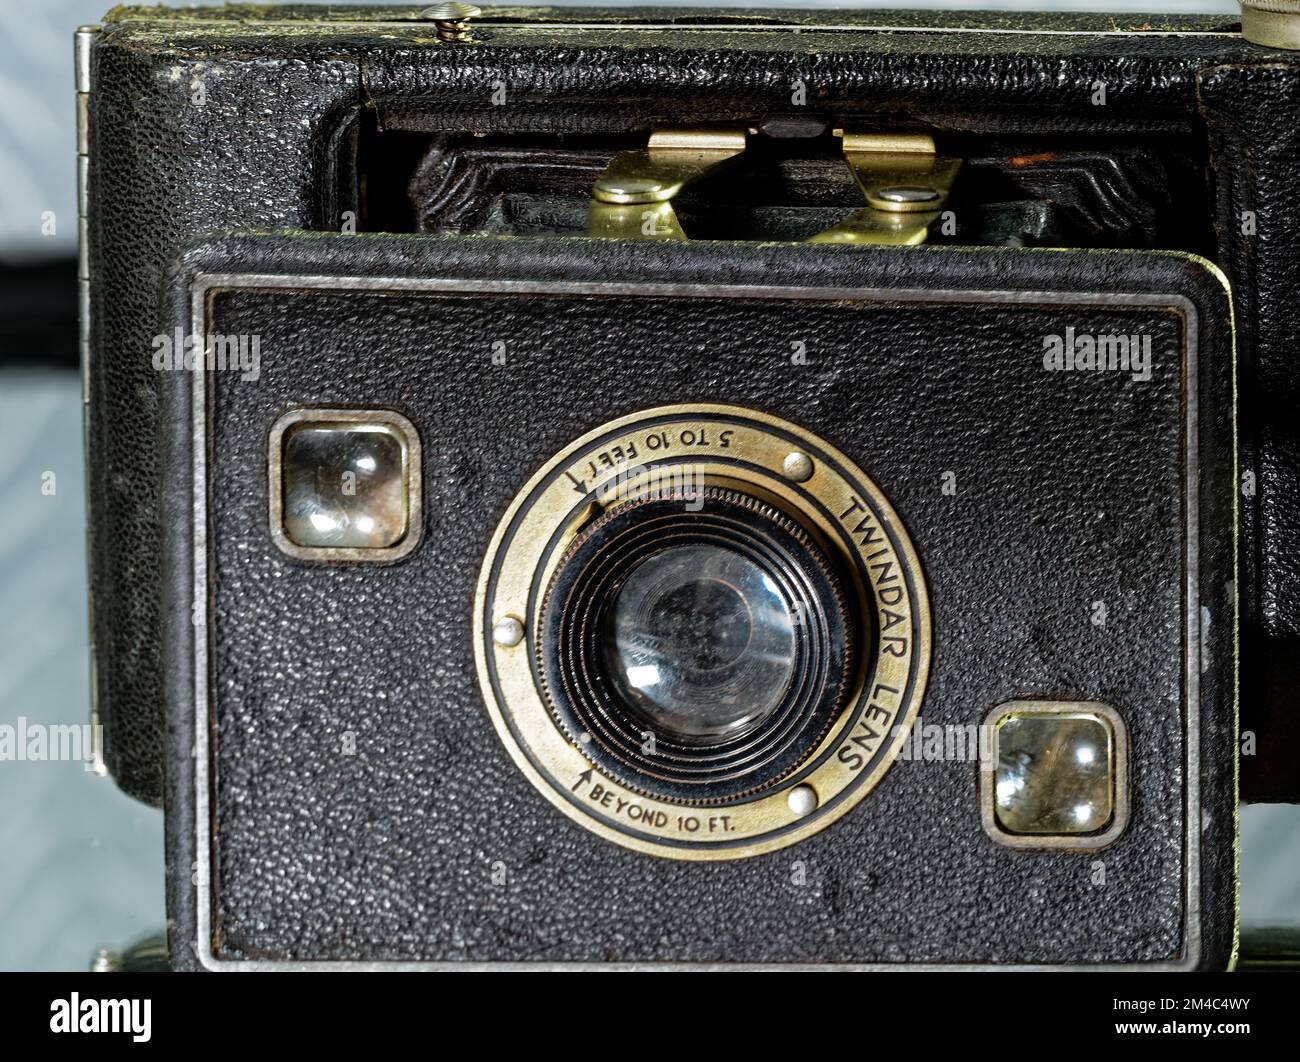 12 18 2022 Vintage Jiffy Kodak folding camera by Eastman Kodak Co.of 1940 studioshot Lokgram Kalyan Maharashtra India. Stock Photo